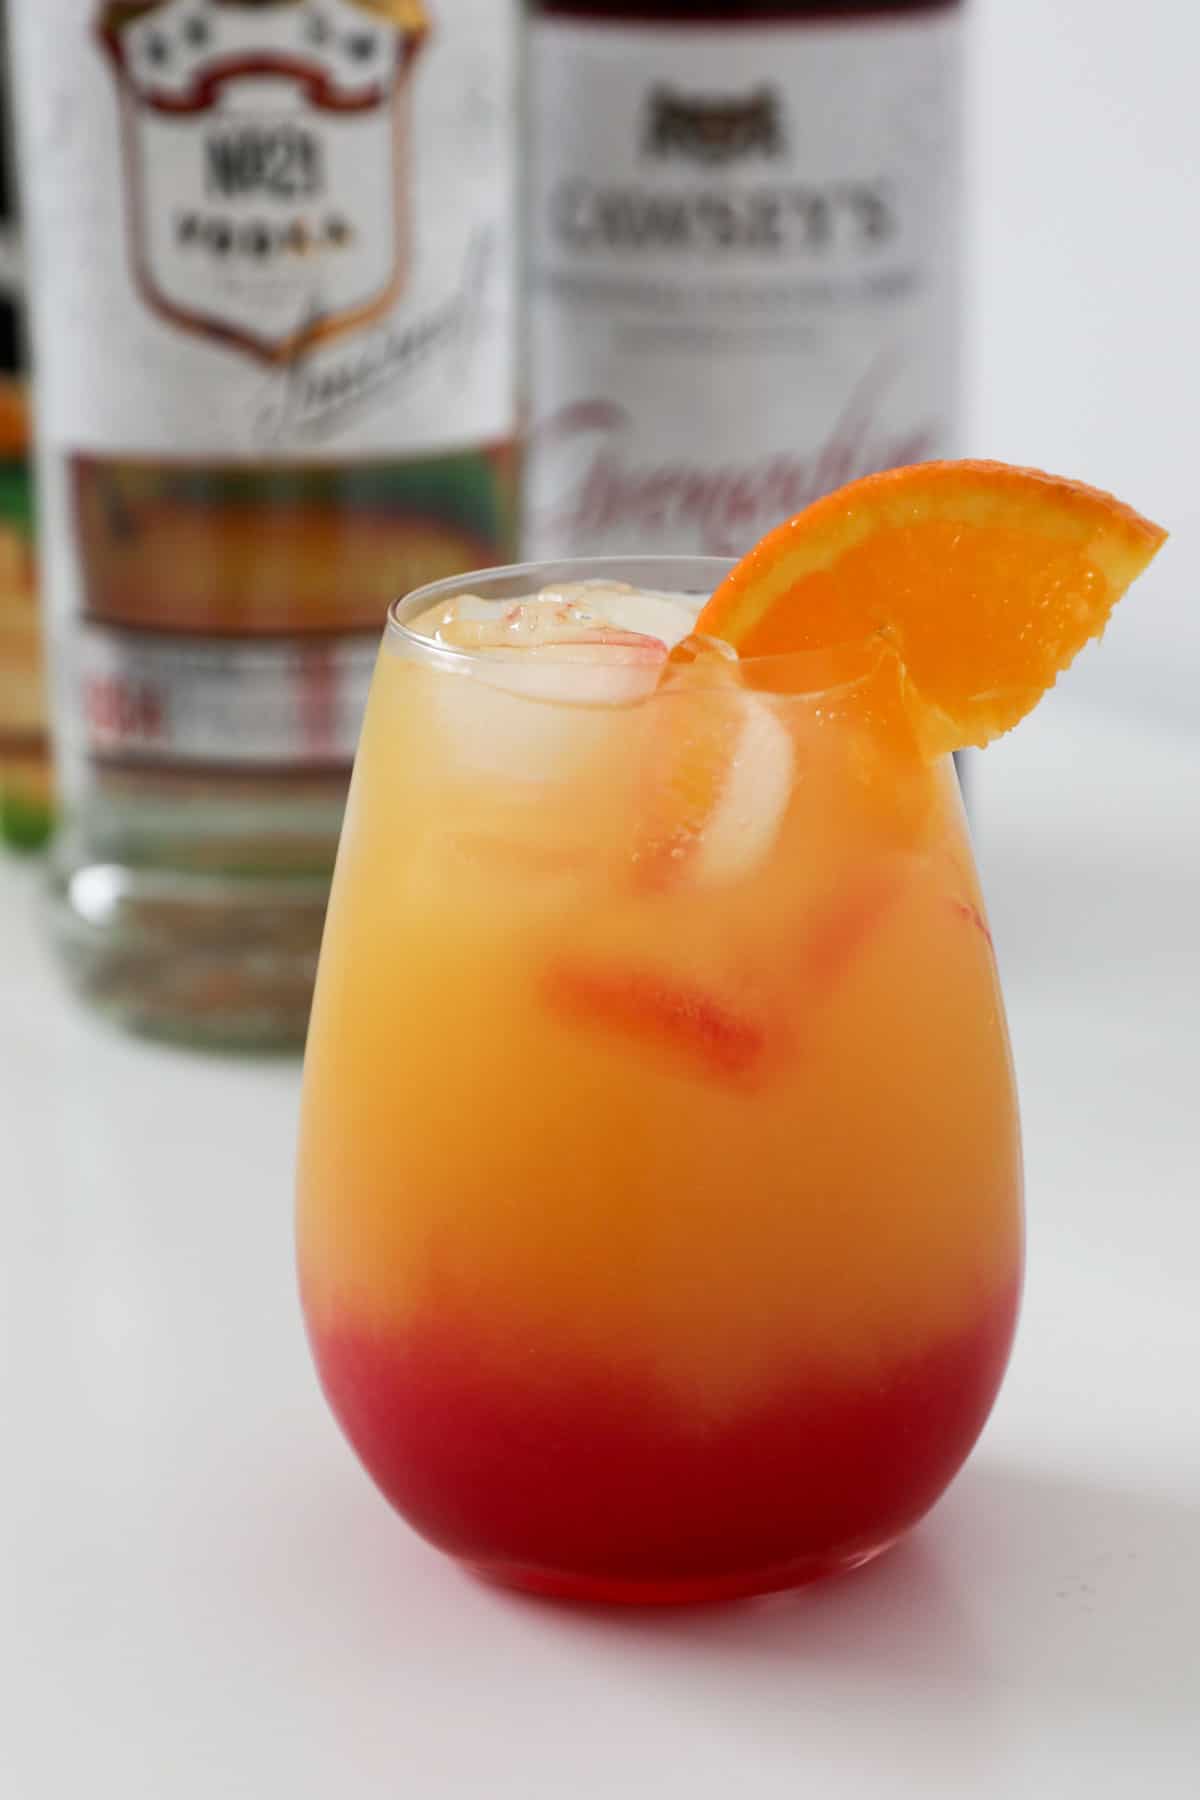 An orange slice in a tropical orange cocktail.